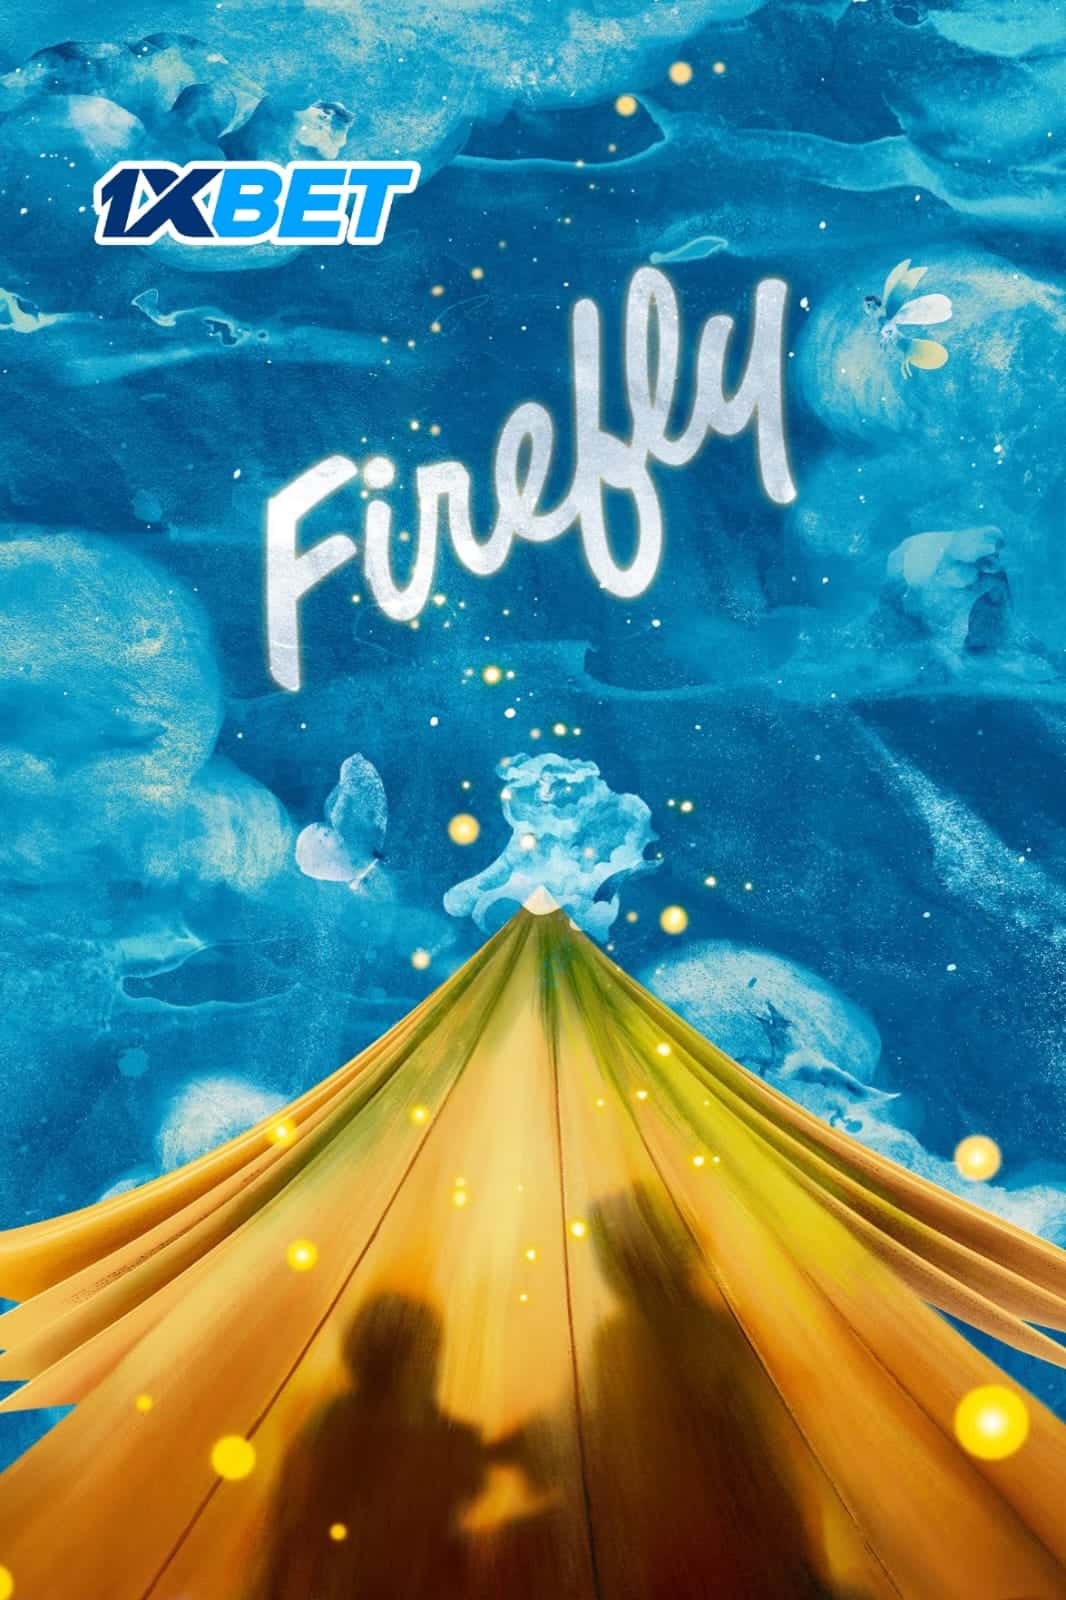 Firefly (2023) HQ Hindi Dubbed Full Movie HD